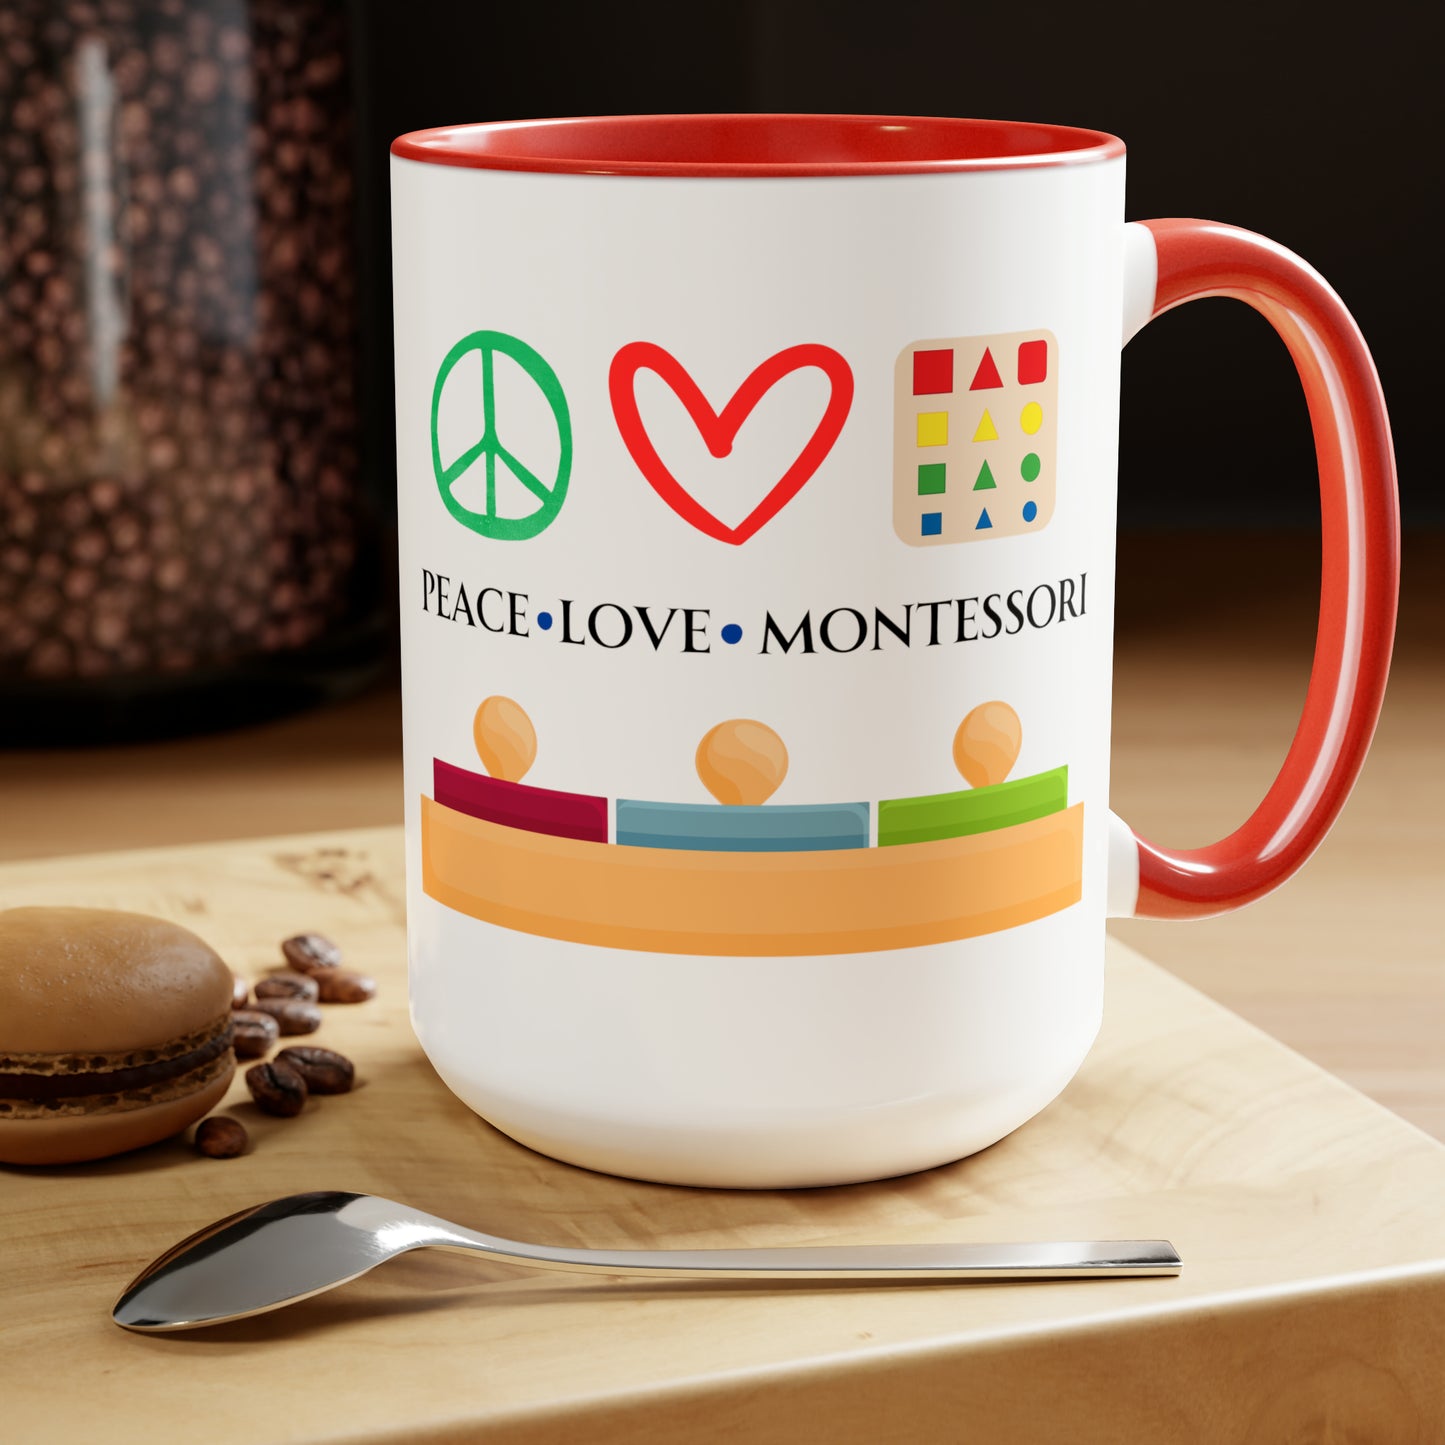 Montessori Two-Tone Coffee Mugs, 15oz